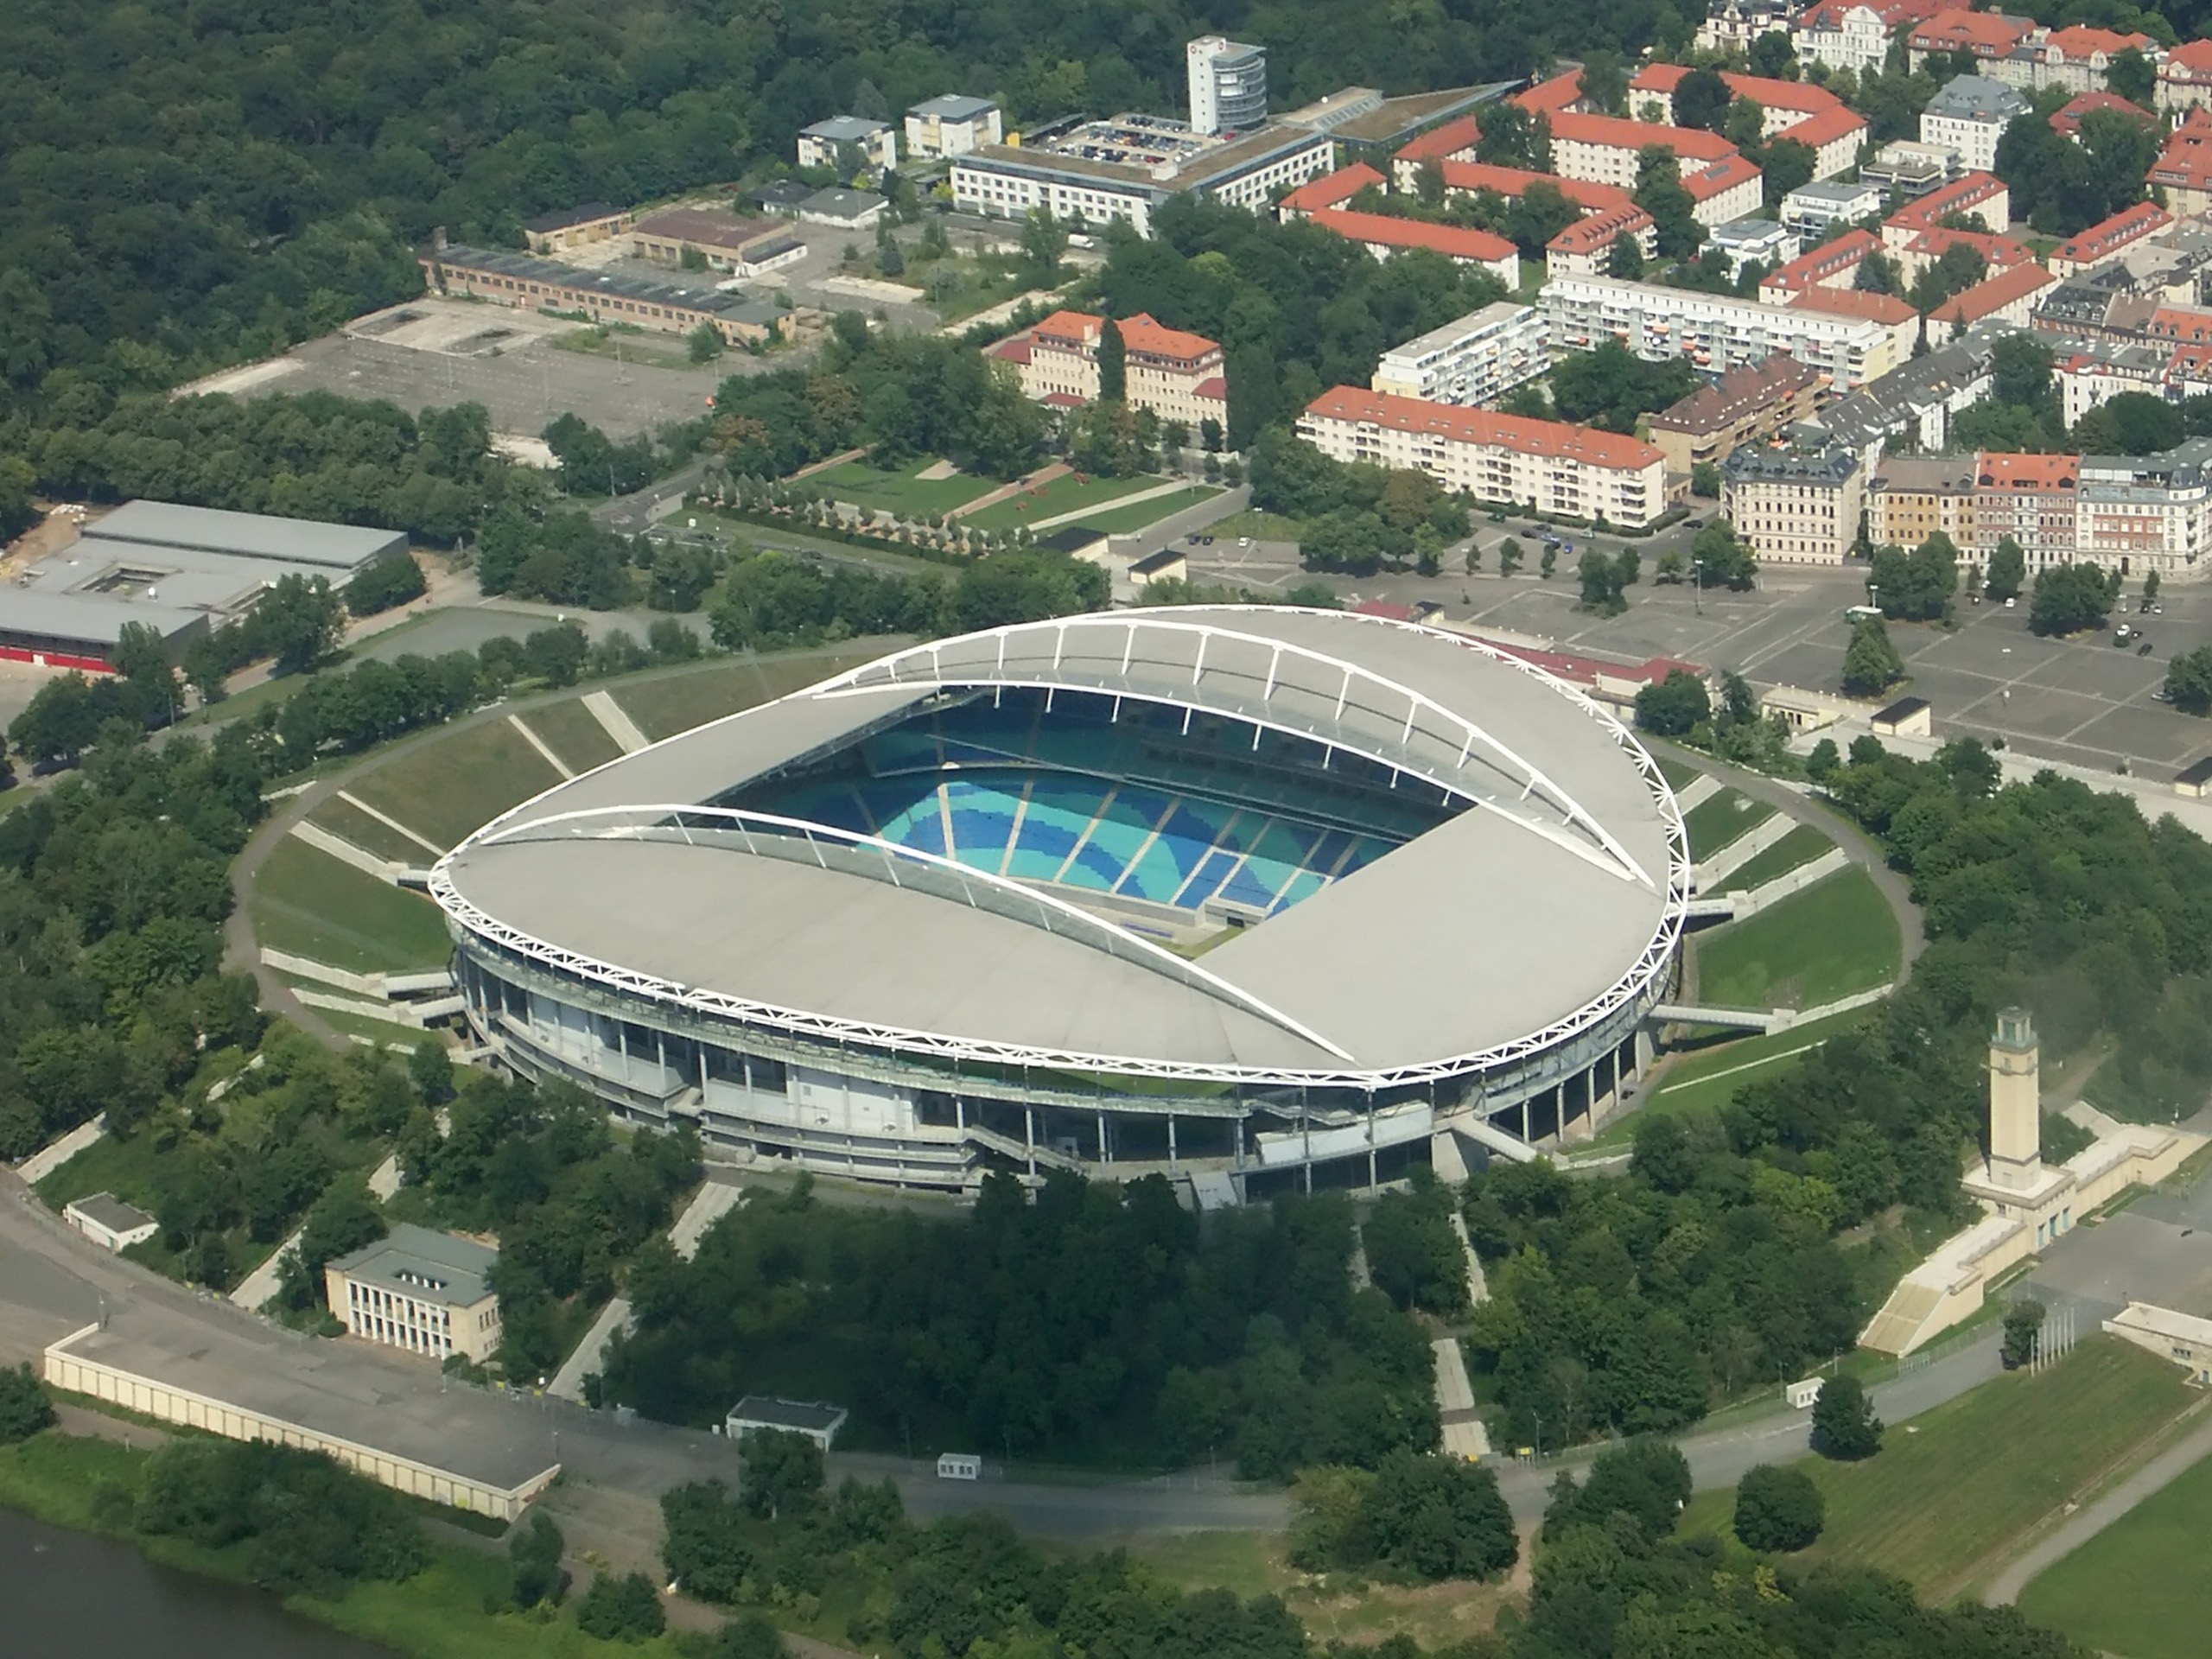 RP Leipzig - Red Bull Arena, Zentralstadion - サッカースタジアム, スタジアム, サッカー